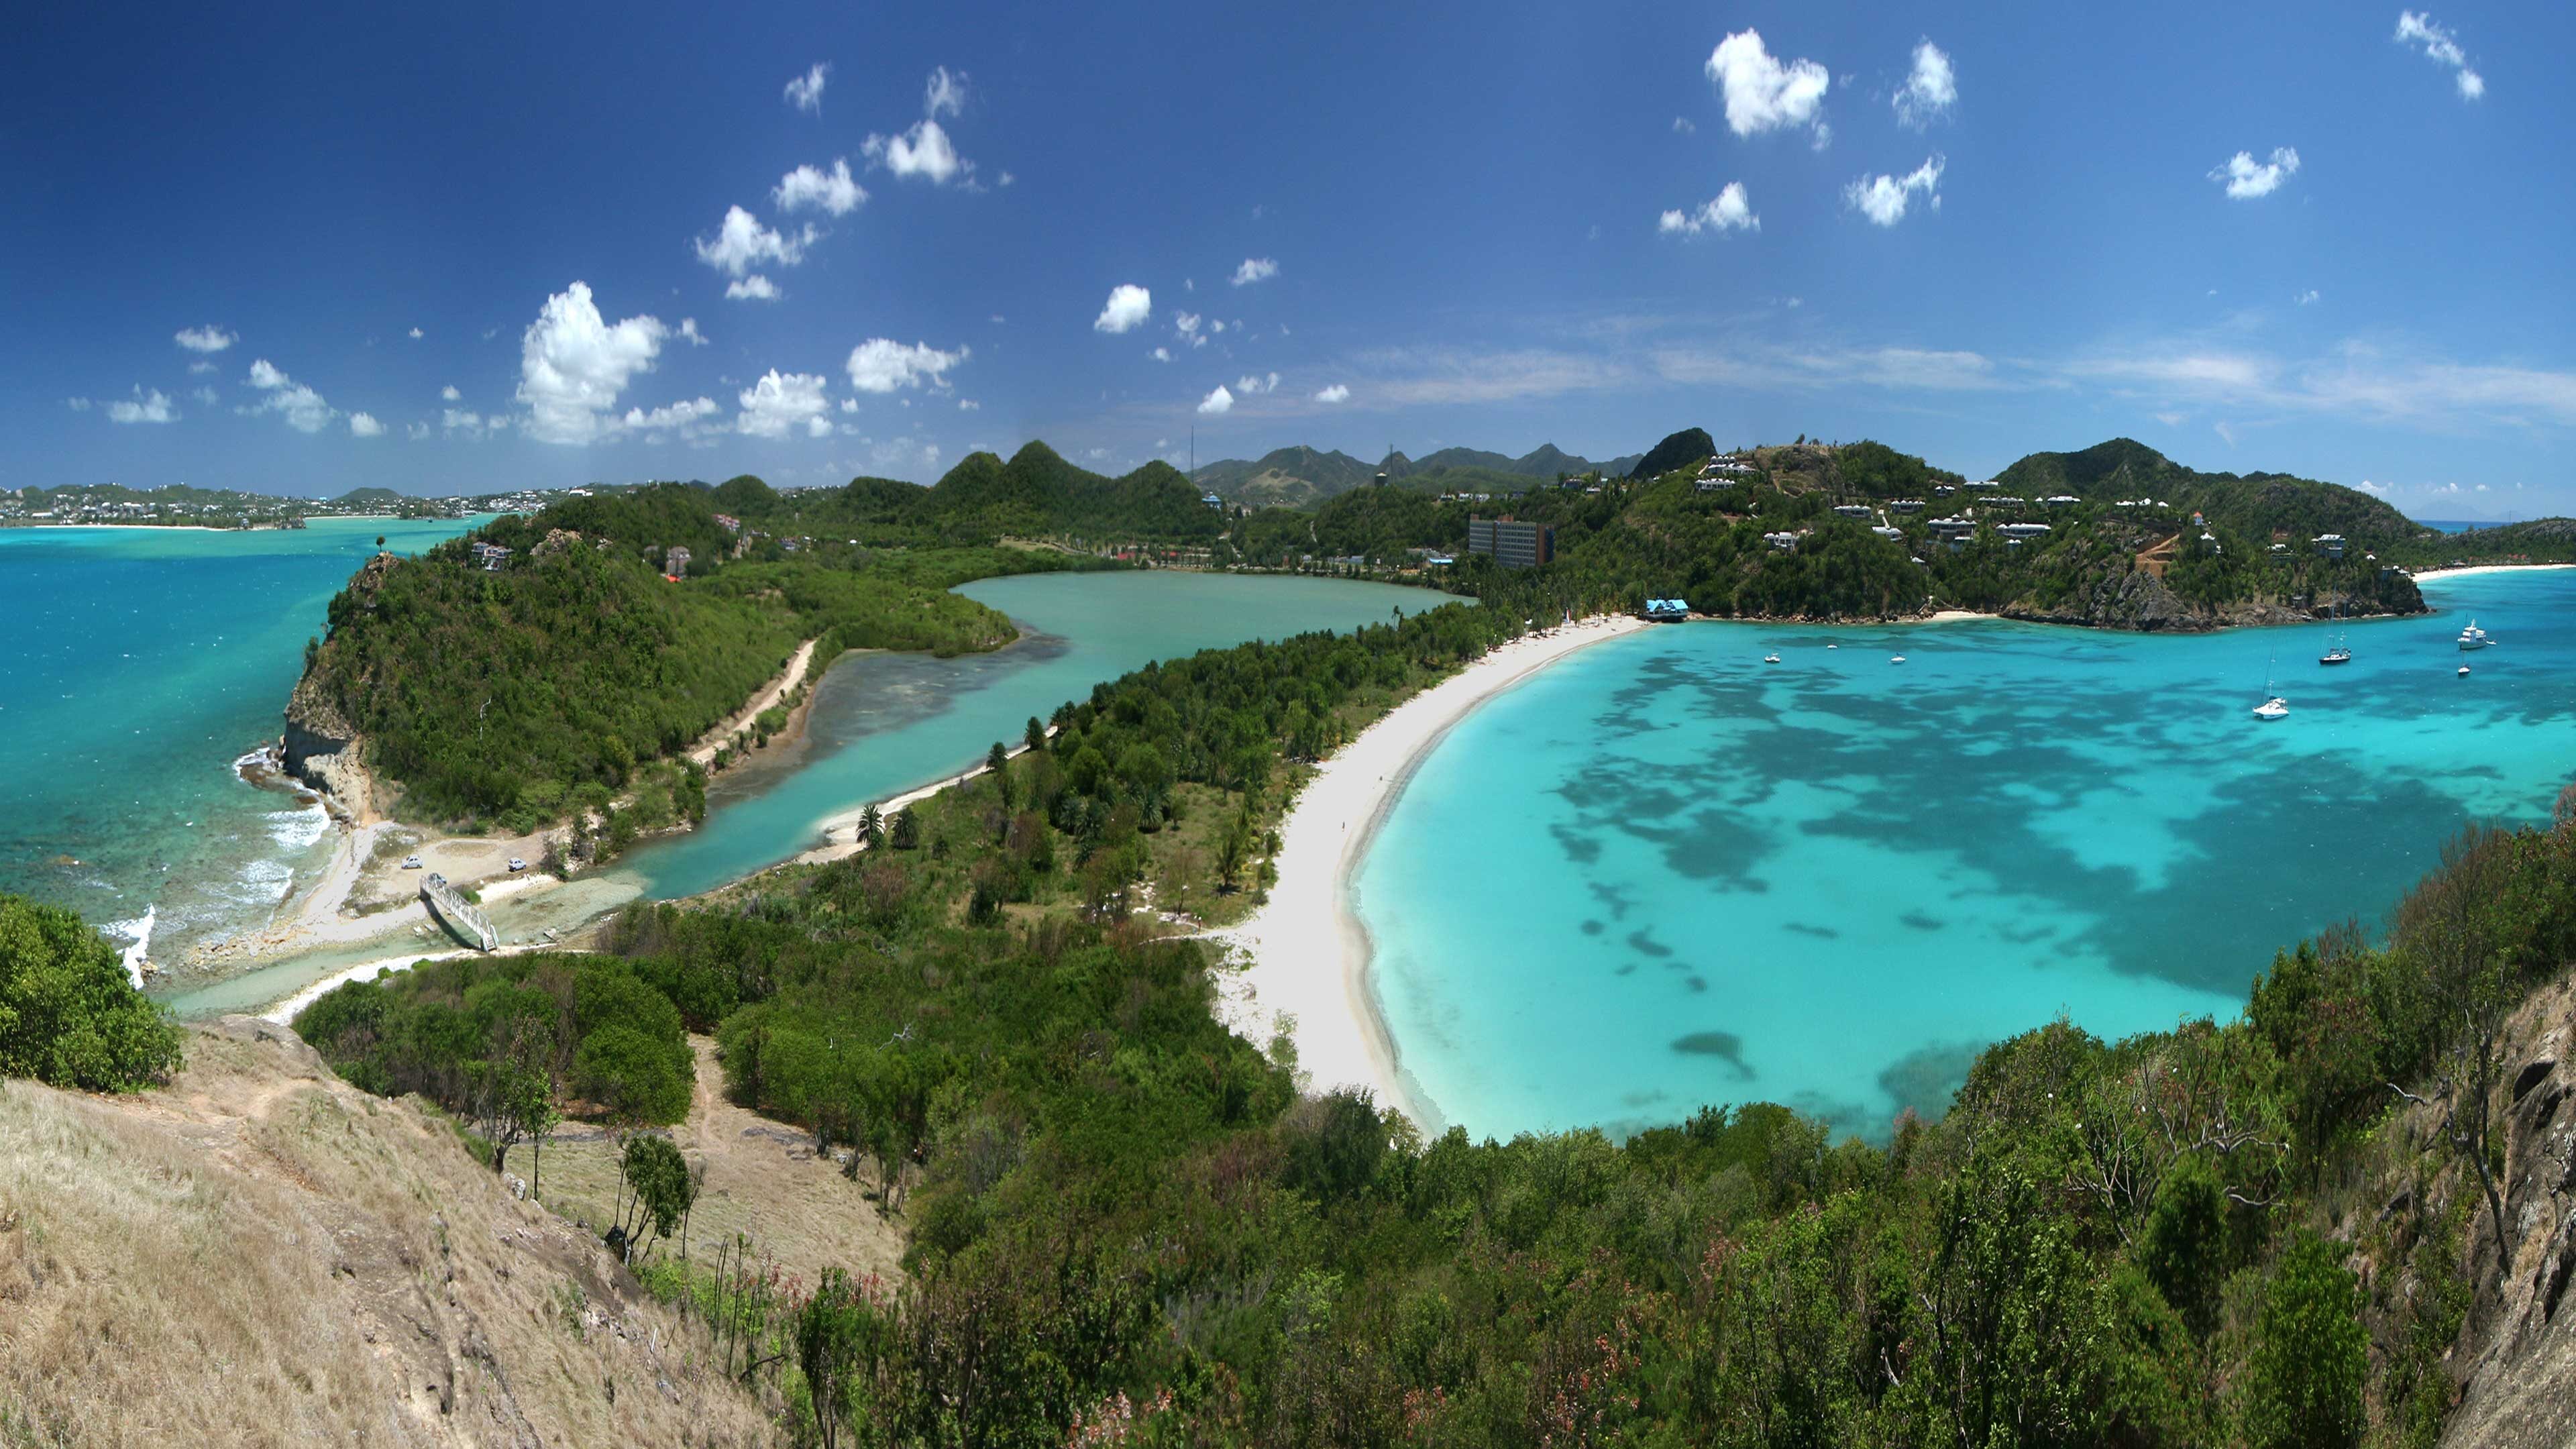 Antigua Cruise: Discover Cruises to Antigua | Celebrity Cruises3840 x 2160